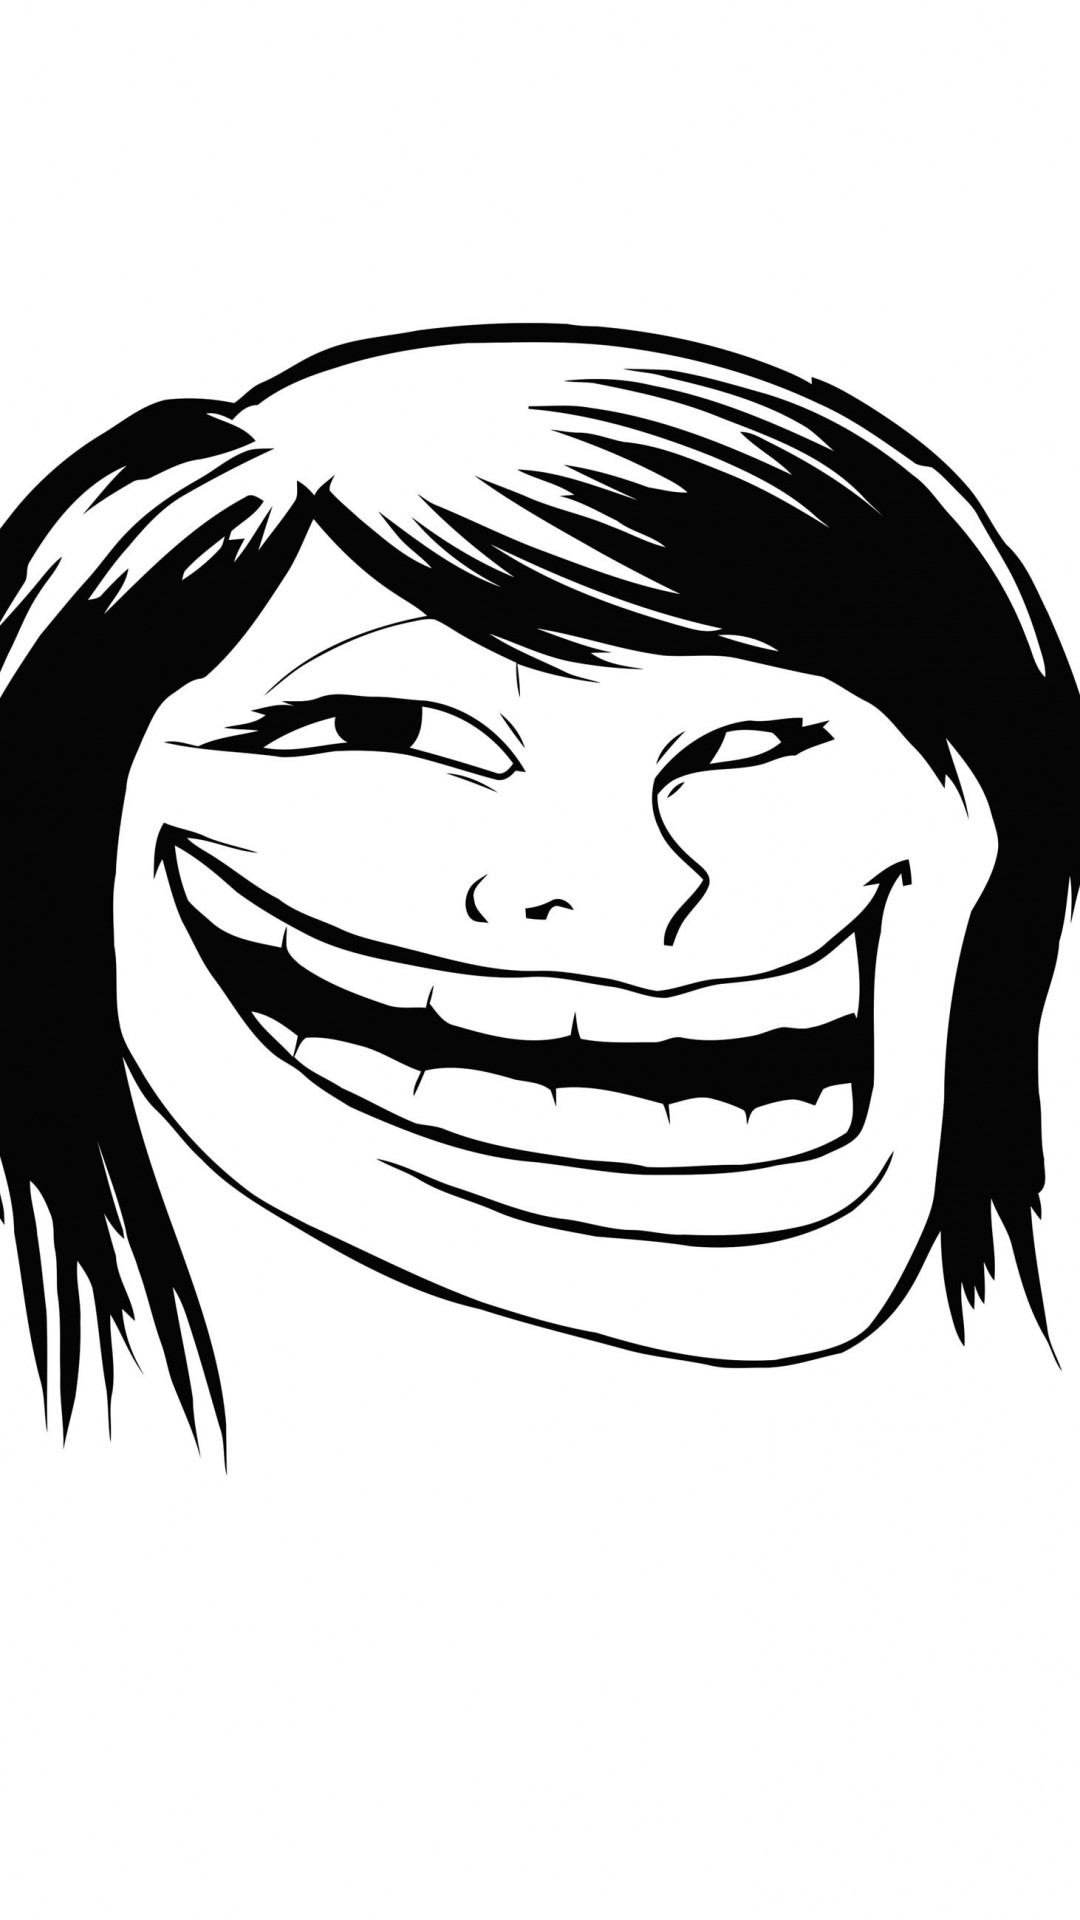 Female Troll Face Meme Wallpaper for SONY Xperia Z1